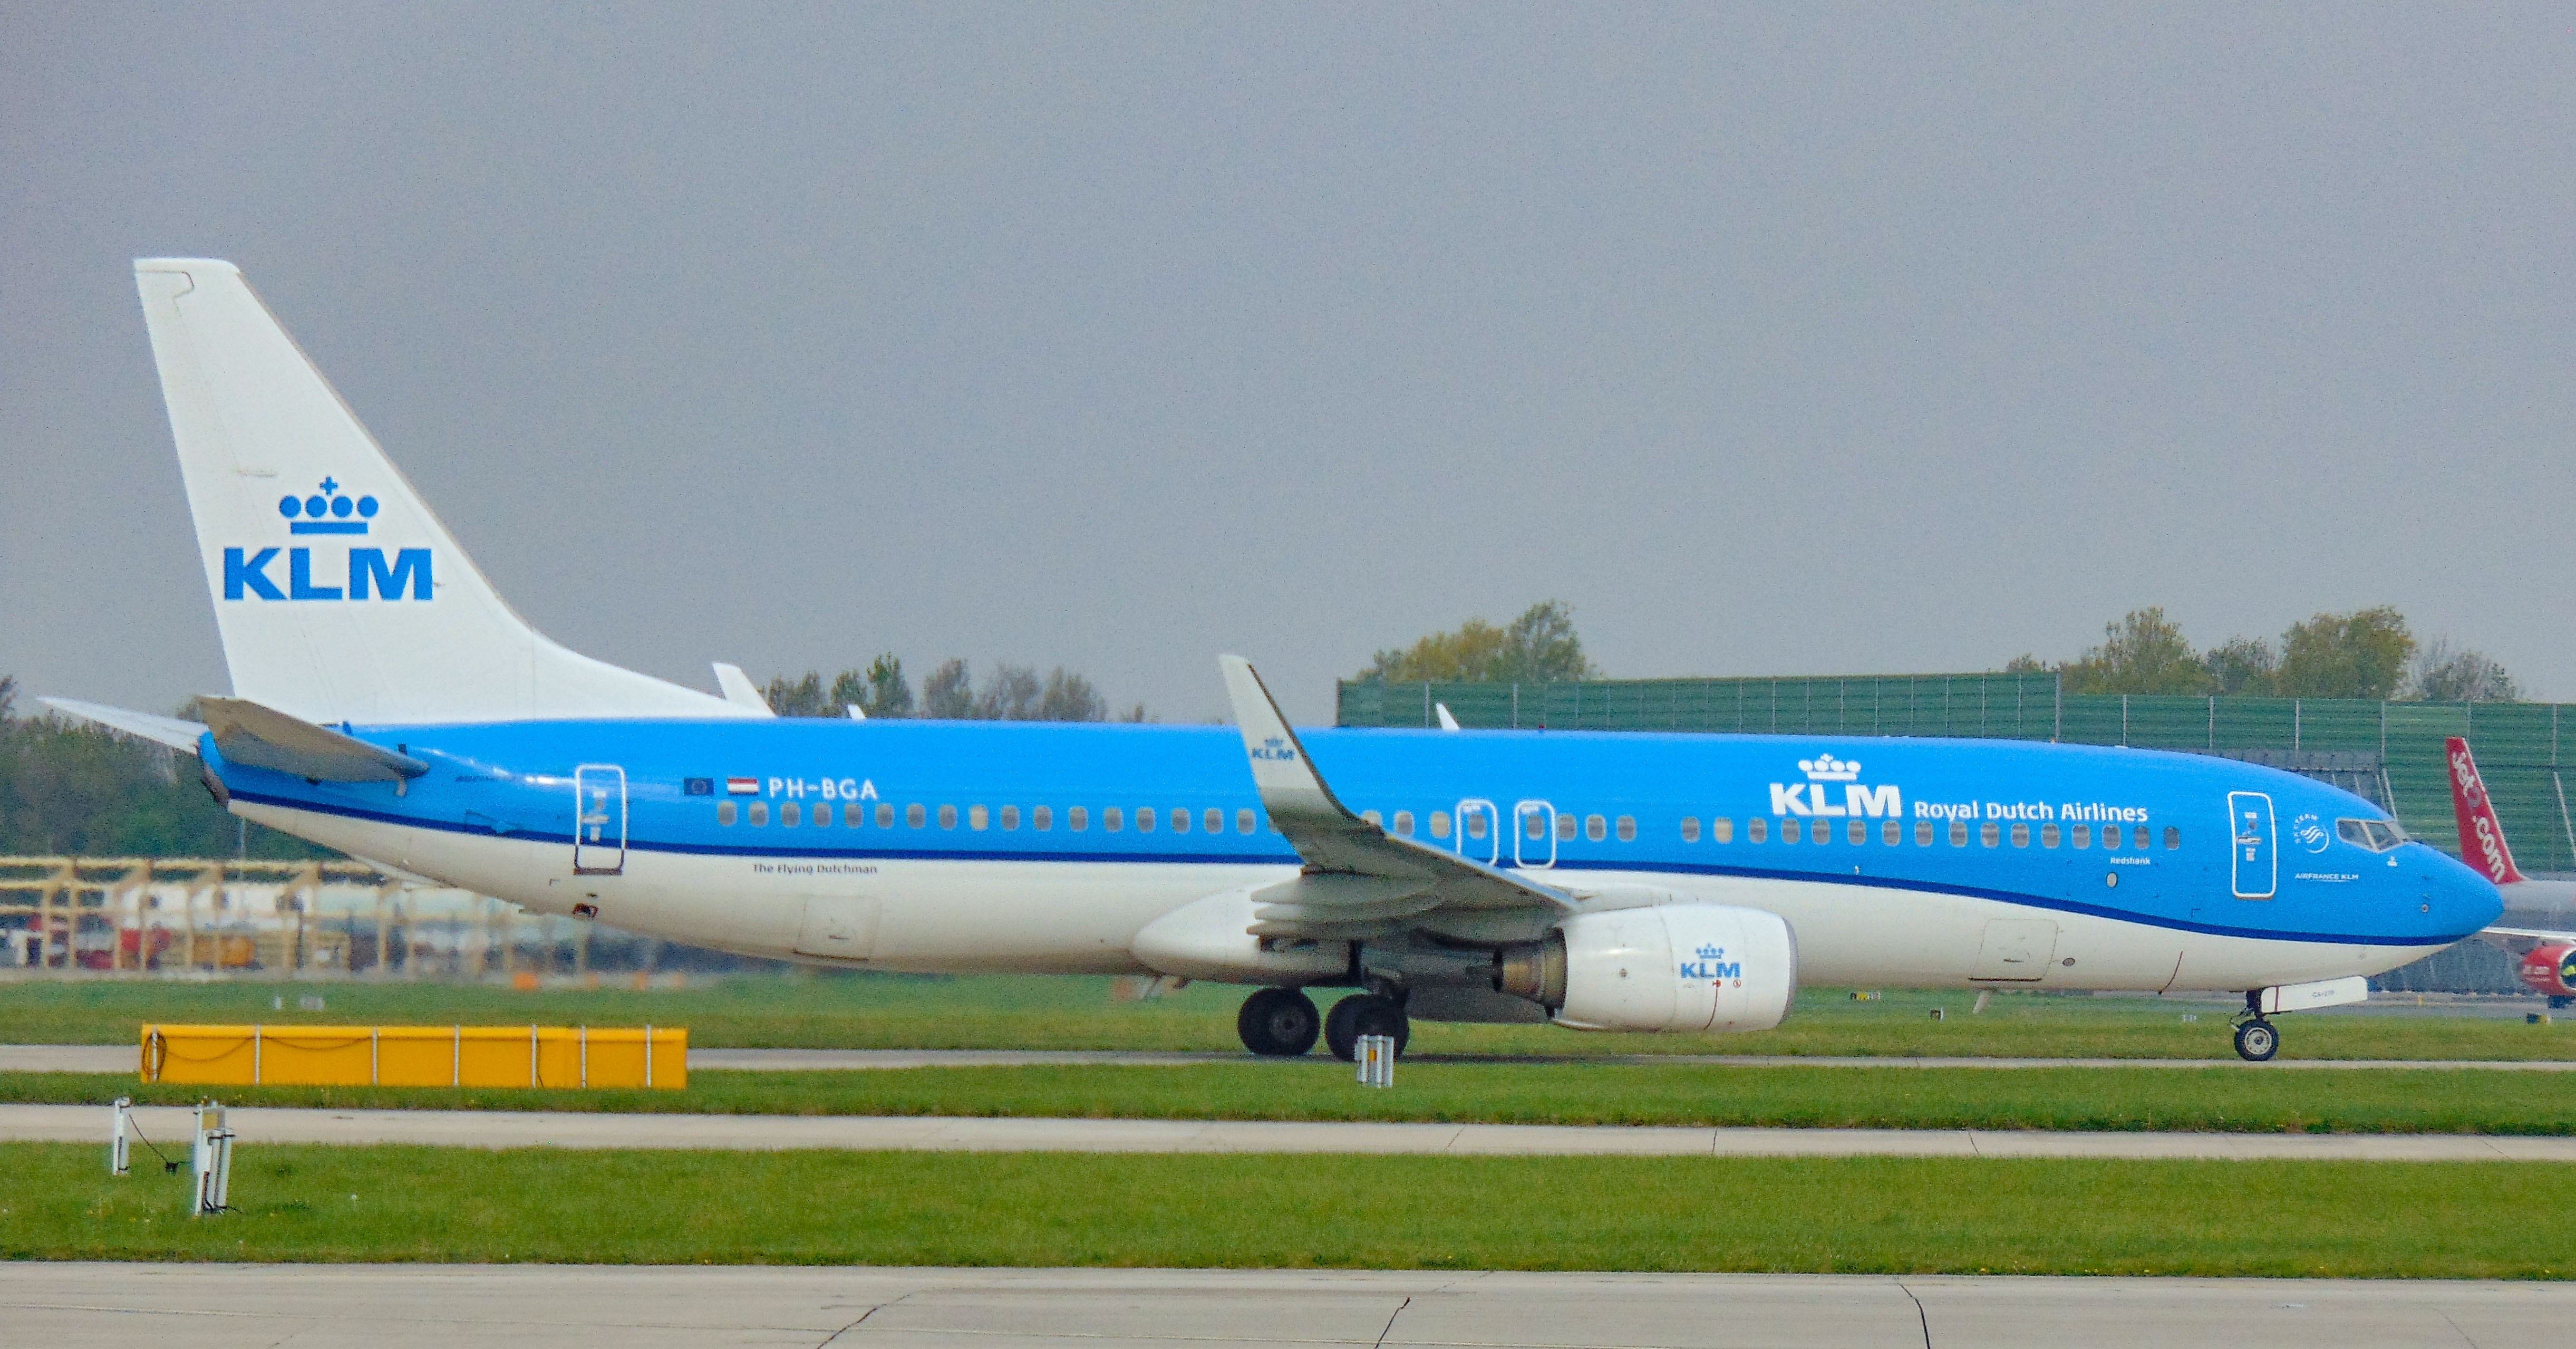 PH-BGA/PHBGA KLM Royal Dutch Airlines Boeing 737 NG Airframe Information - AVSpotters.com